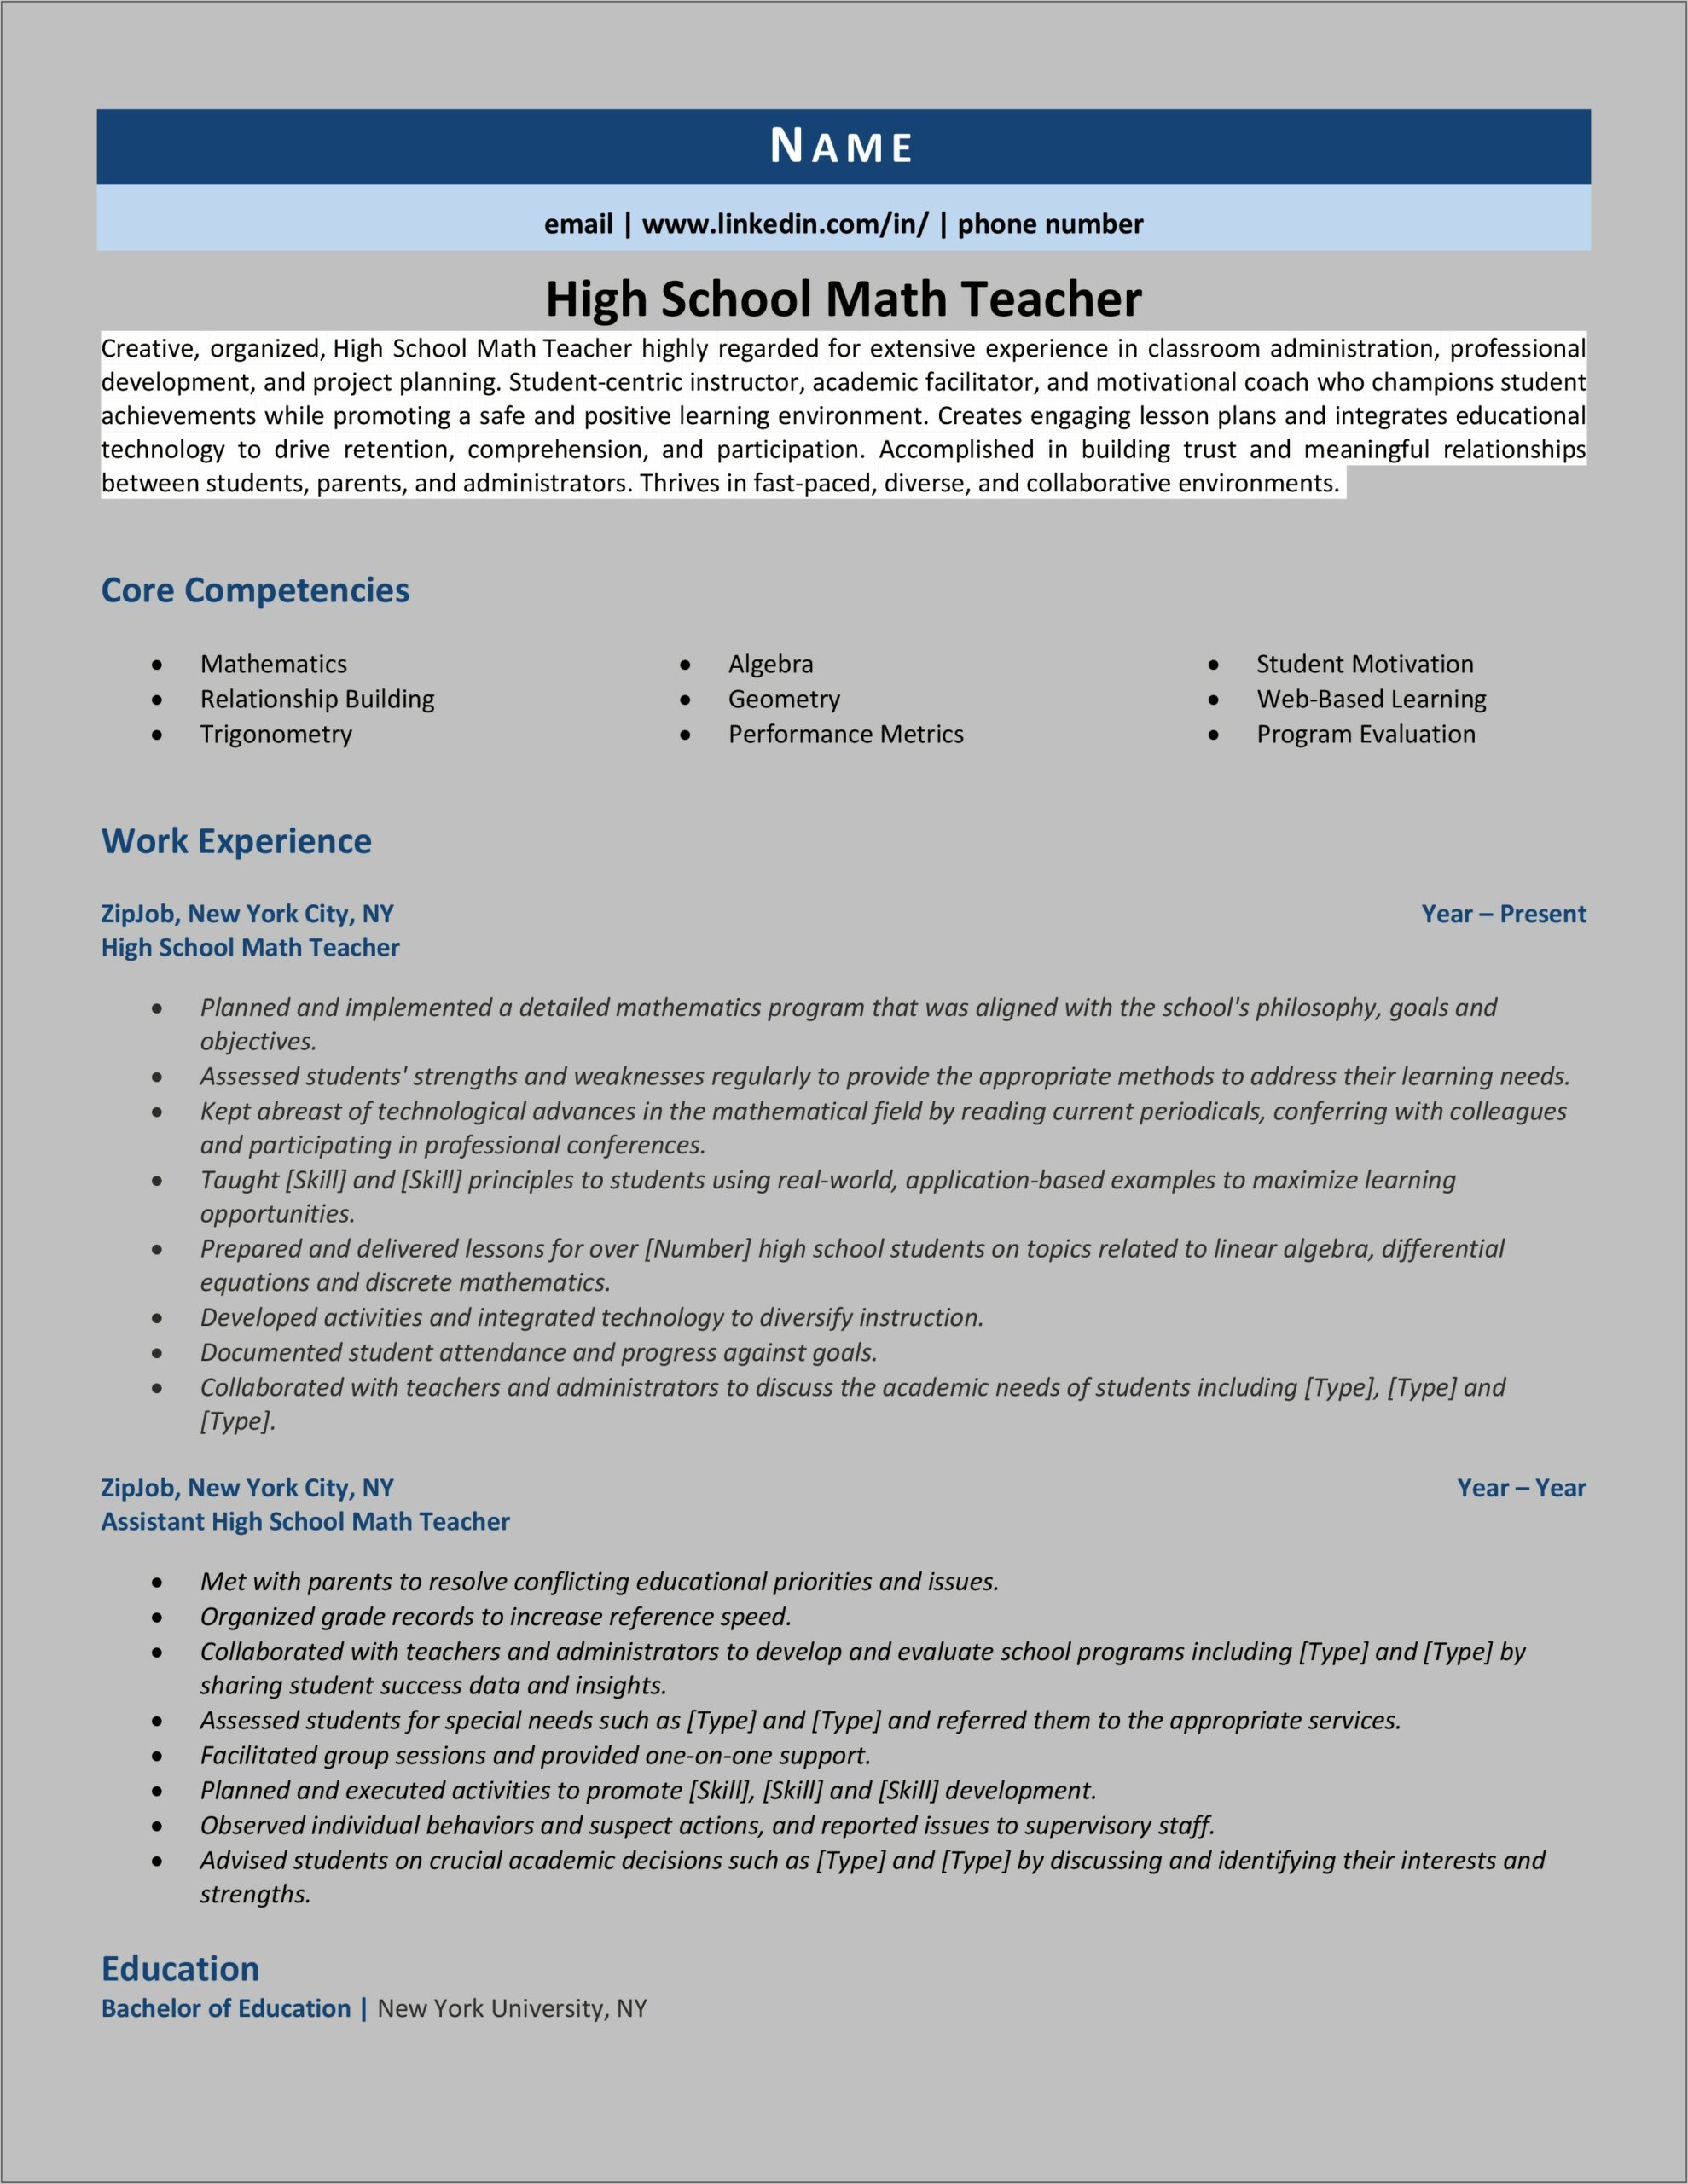 Resume For Middle School Math Teacher